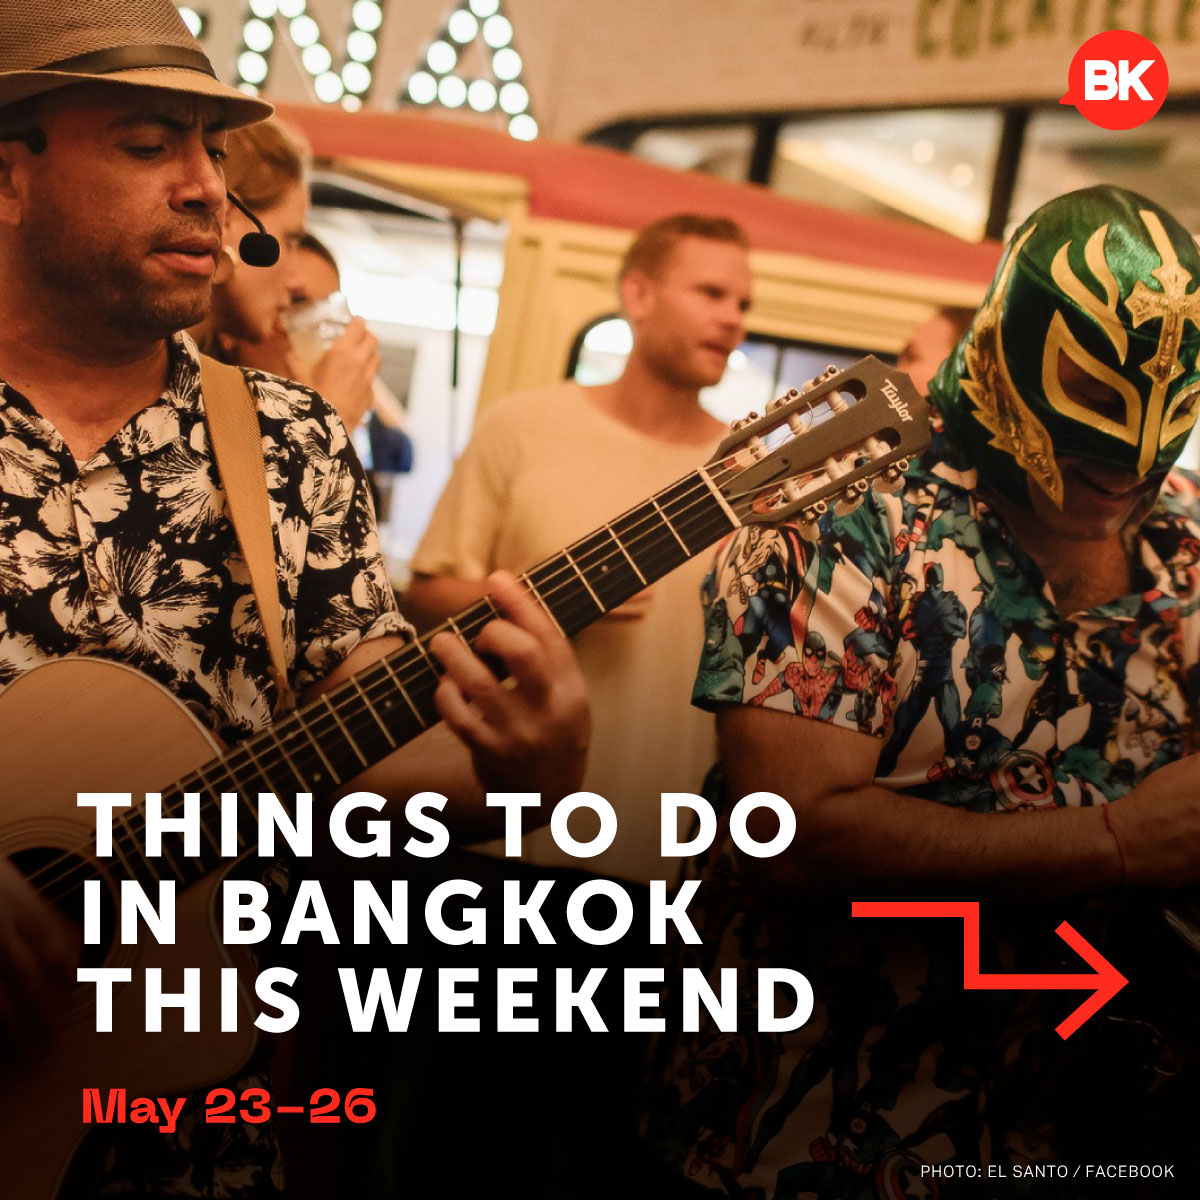 Sangria by the bowl, art battles, horror improv, Fatty's Fest, live music, and more. bk.asia-city.com/things-to-do-b…